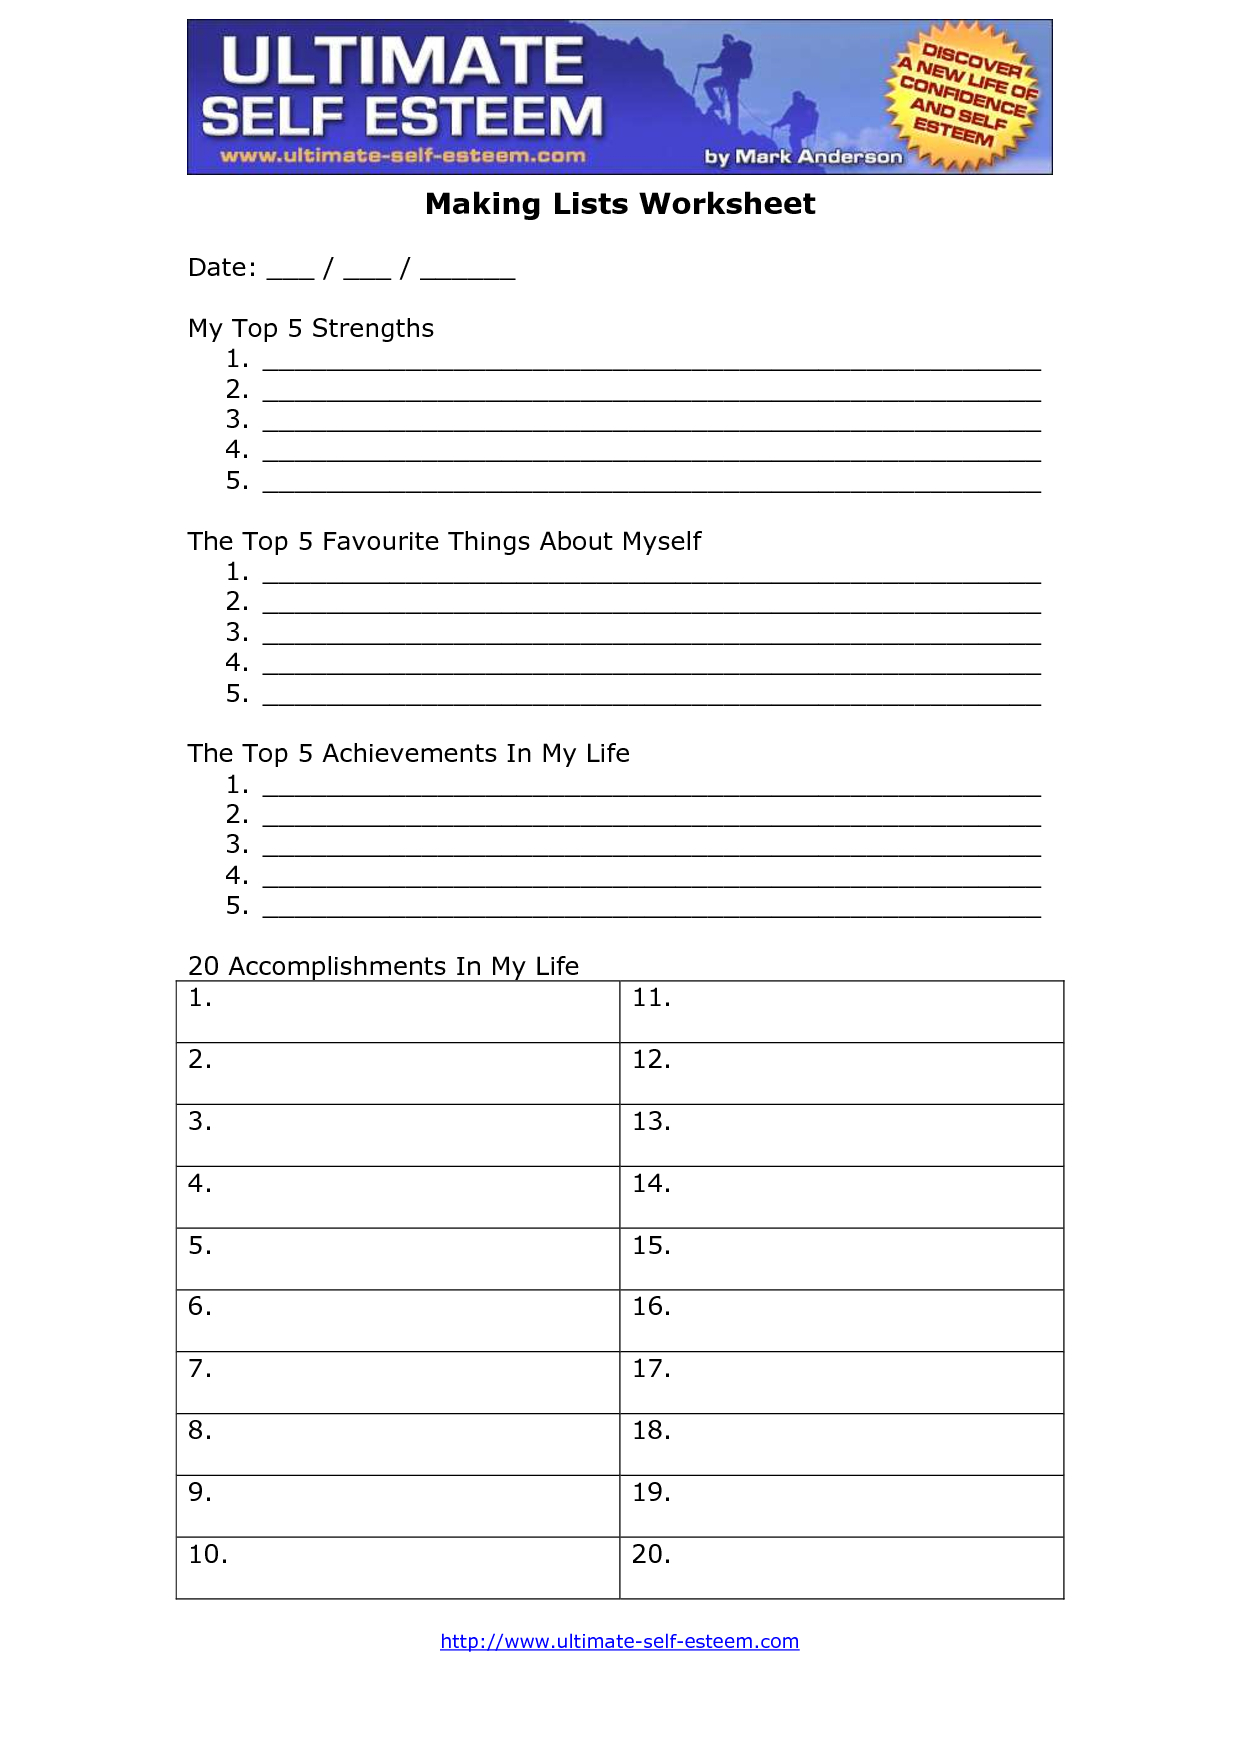 the self esteem workbook pdf free download